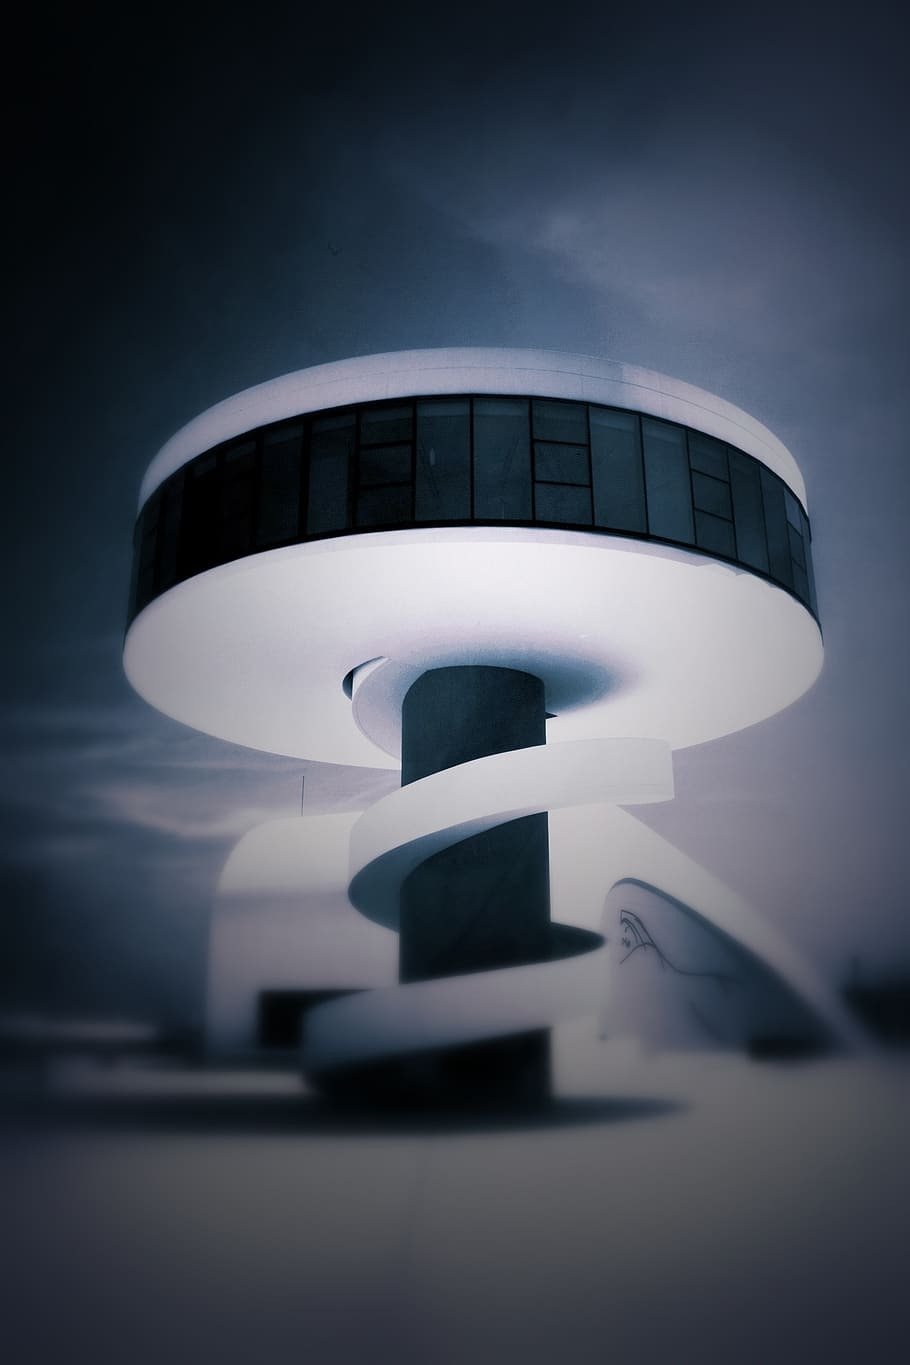 Centro Niemeyer, Avilés, Spain,Oscar Niemeyer - Architect